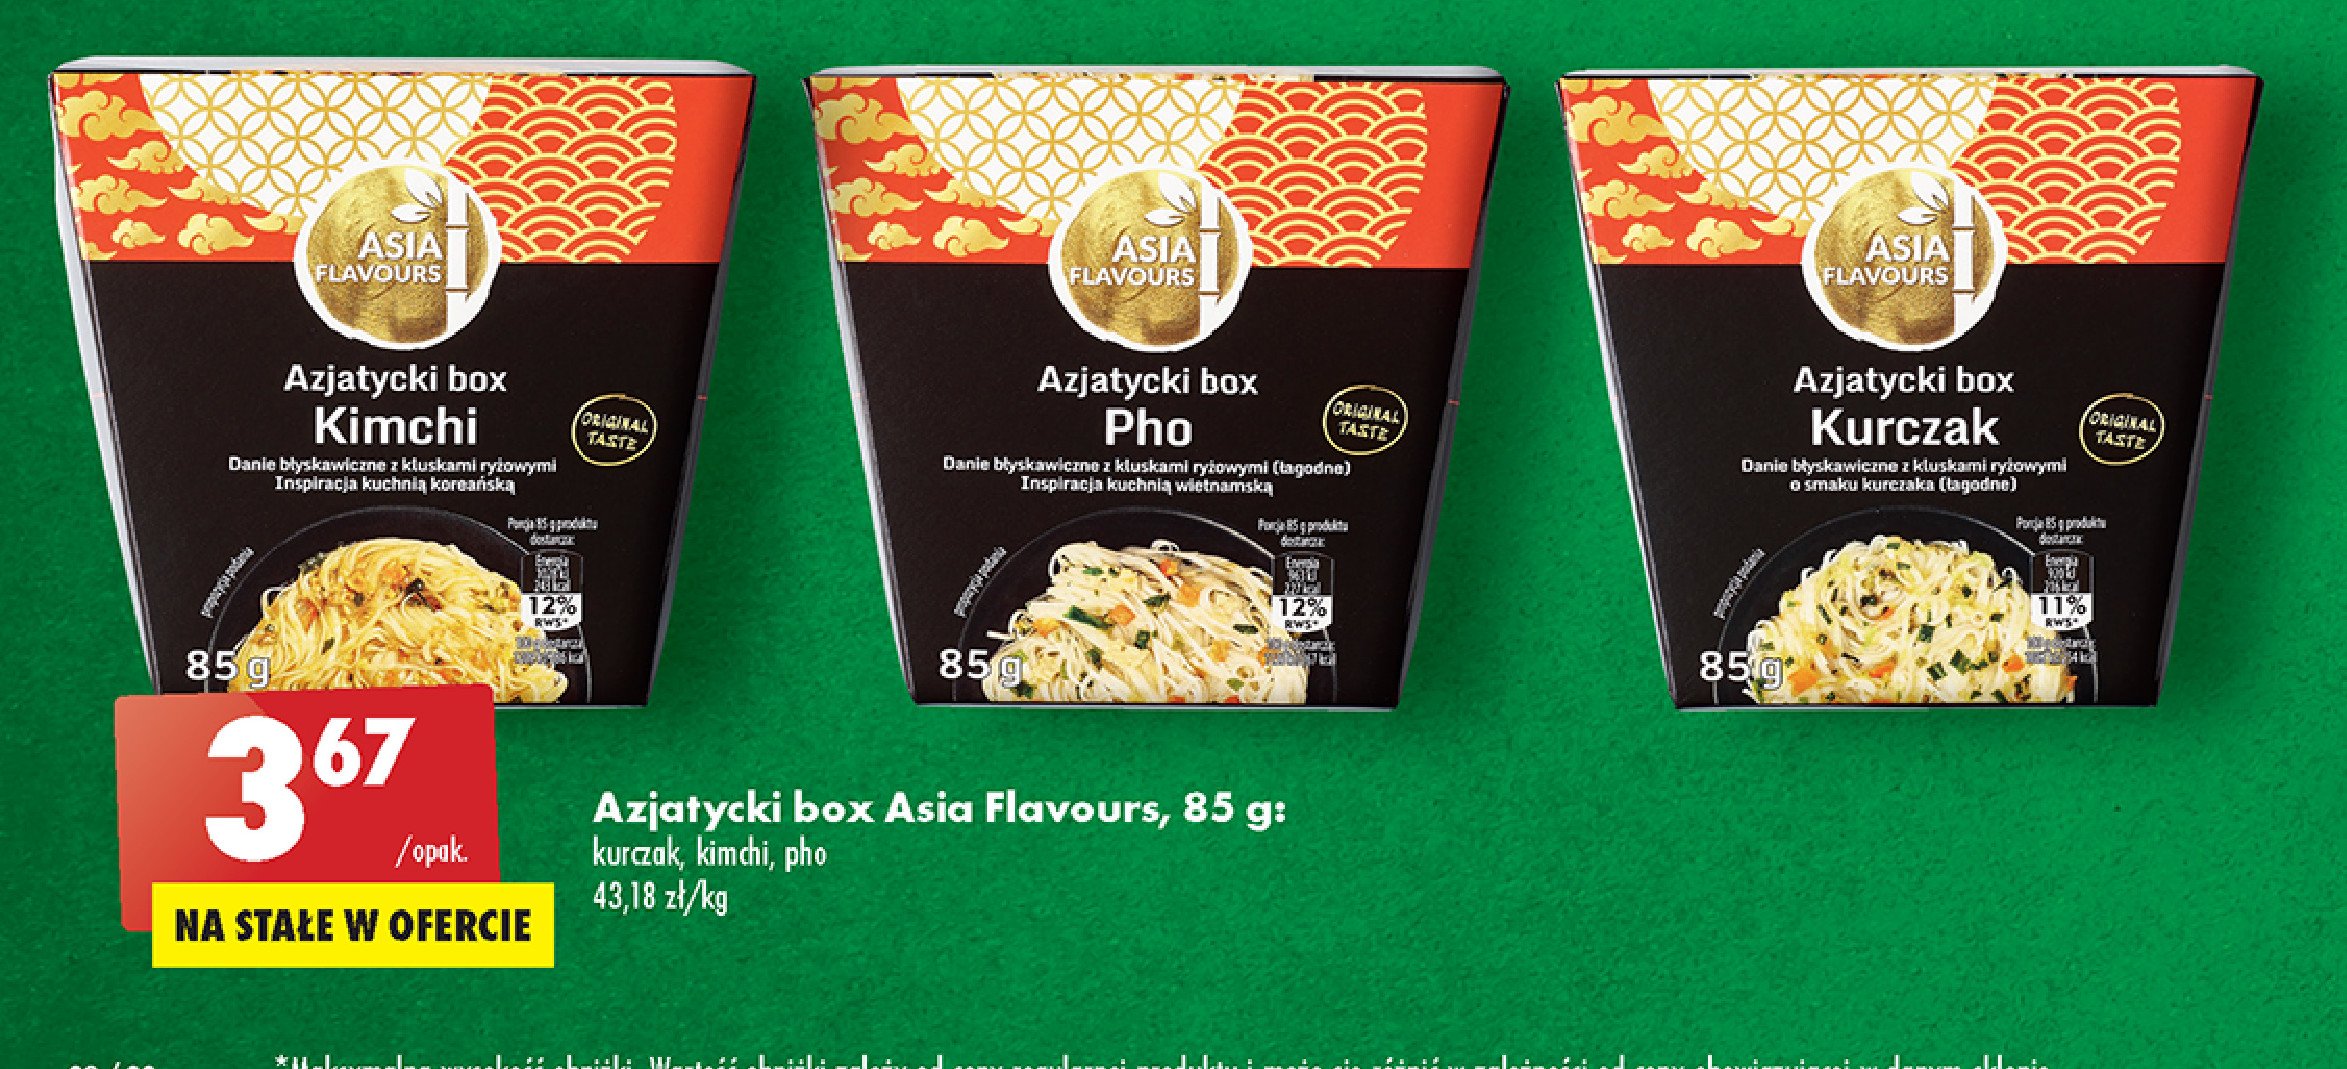 Azjatycki box kimichi Asia flavours promocje